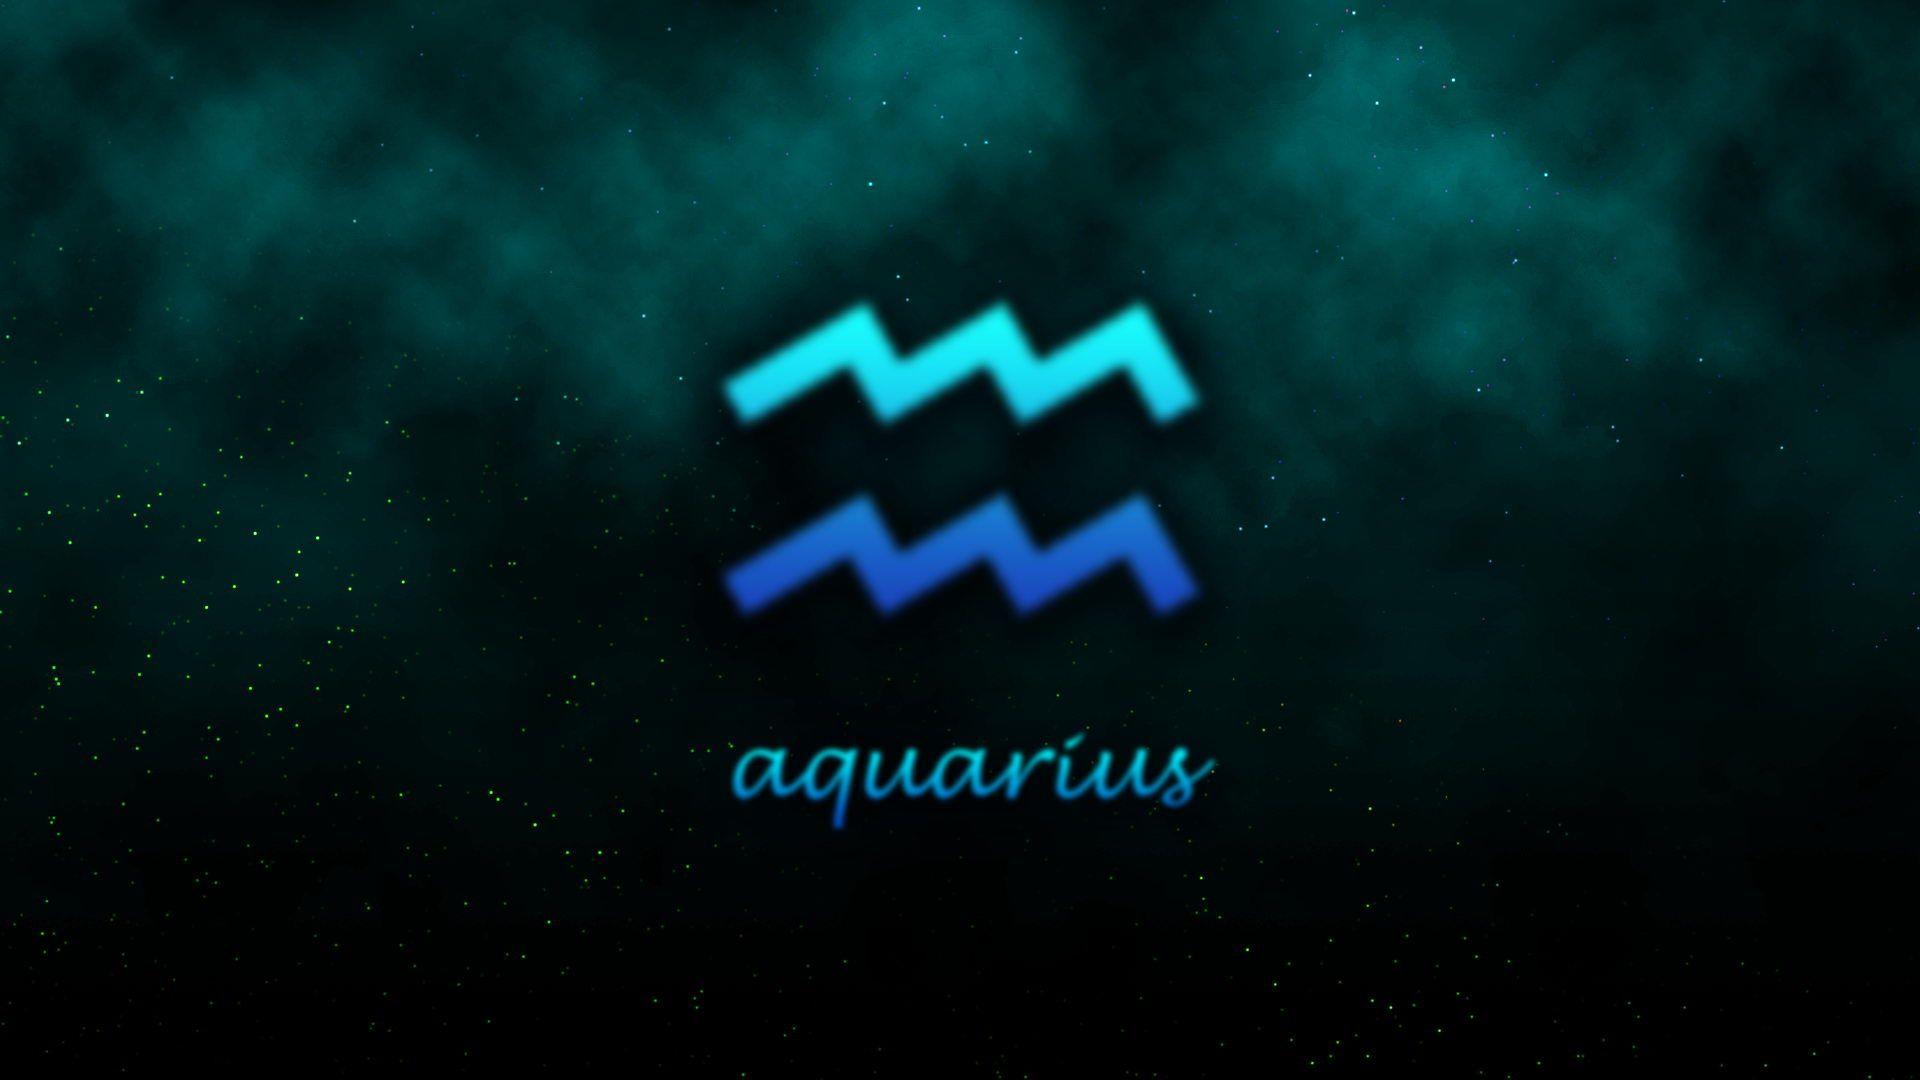 HD Aquarius Wallpaper